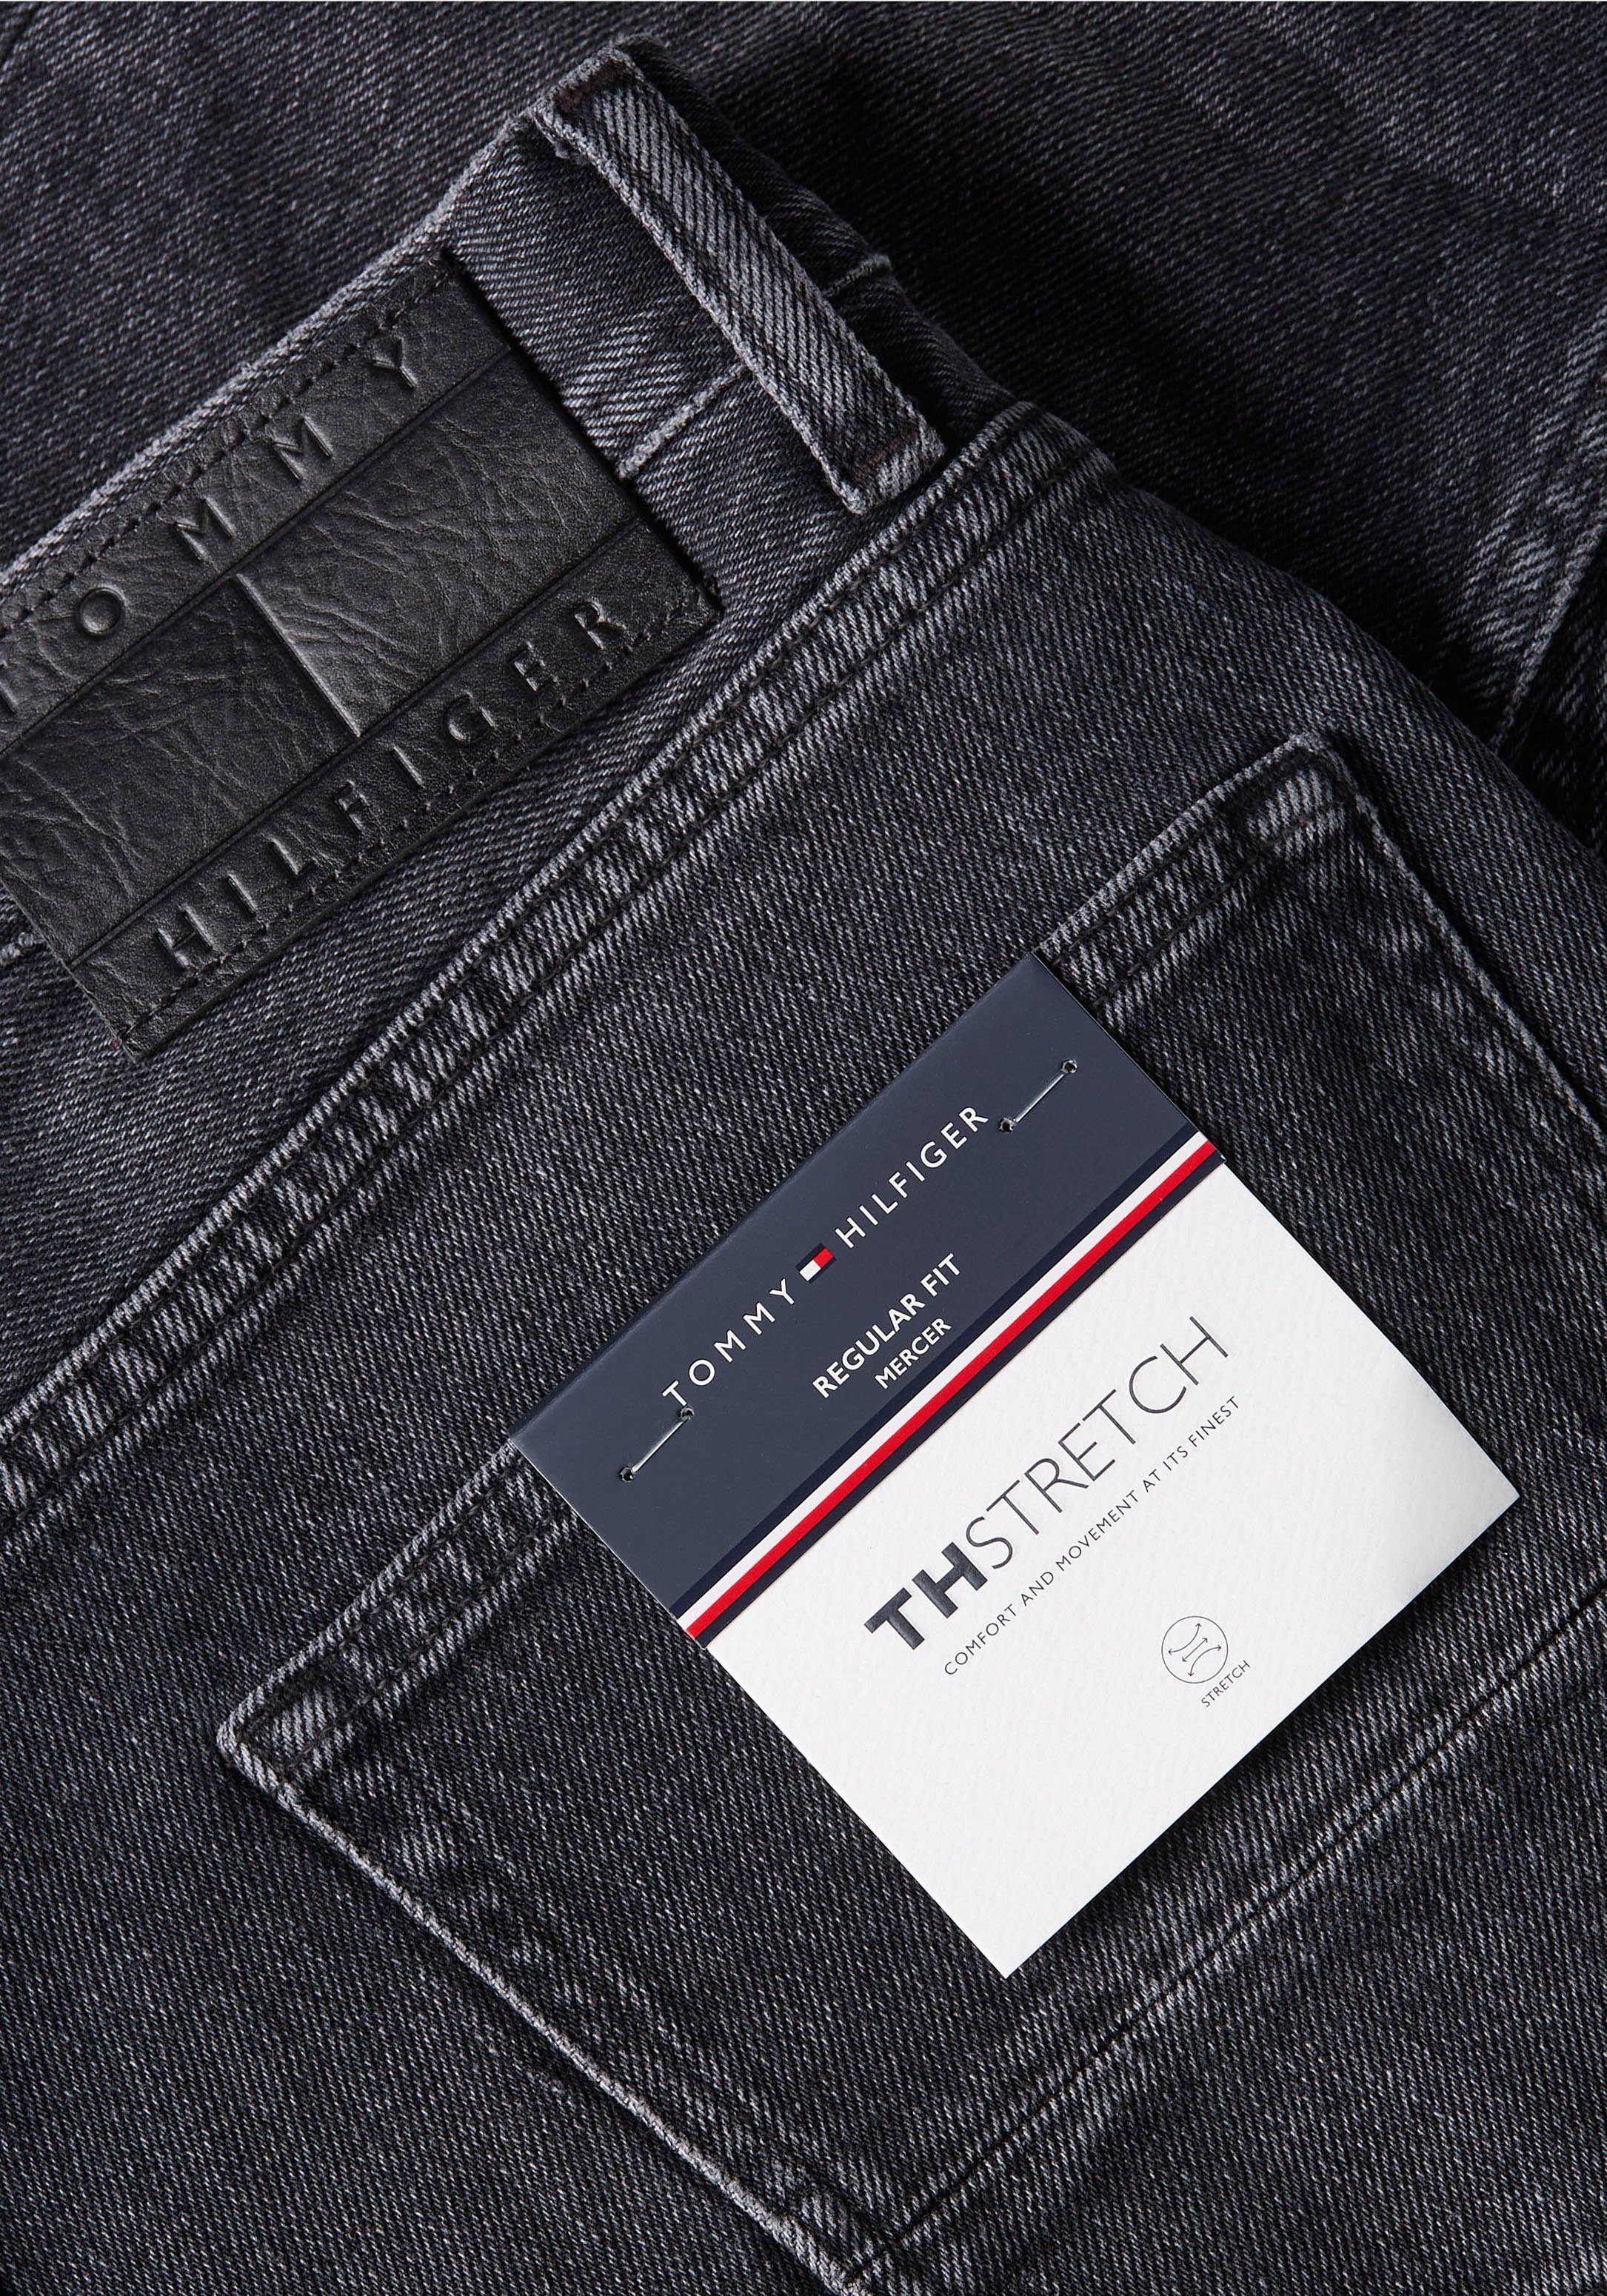 Black Straight-Jeans Morgan MERCER REGULAR STR Tommy Hilfiger